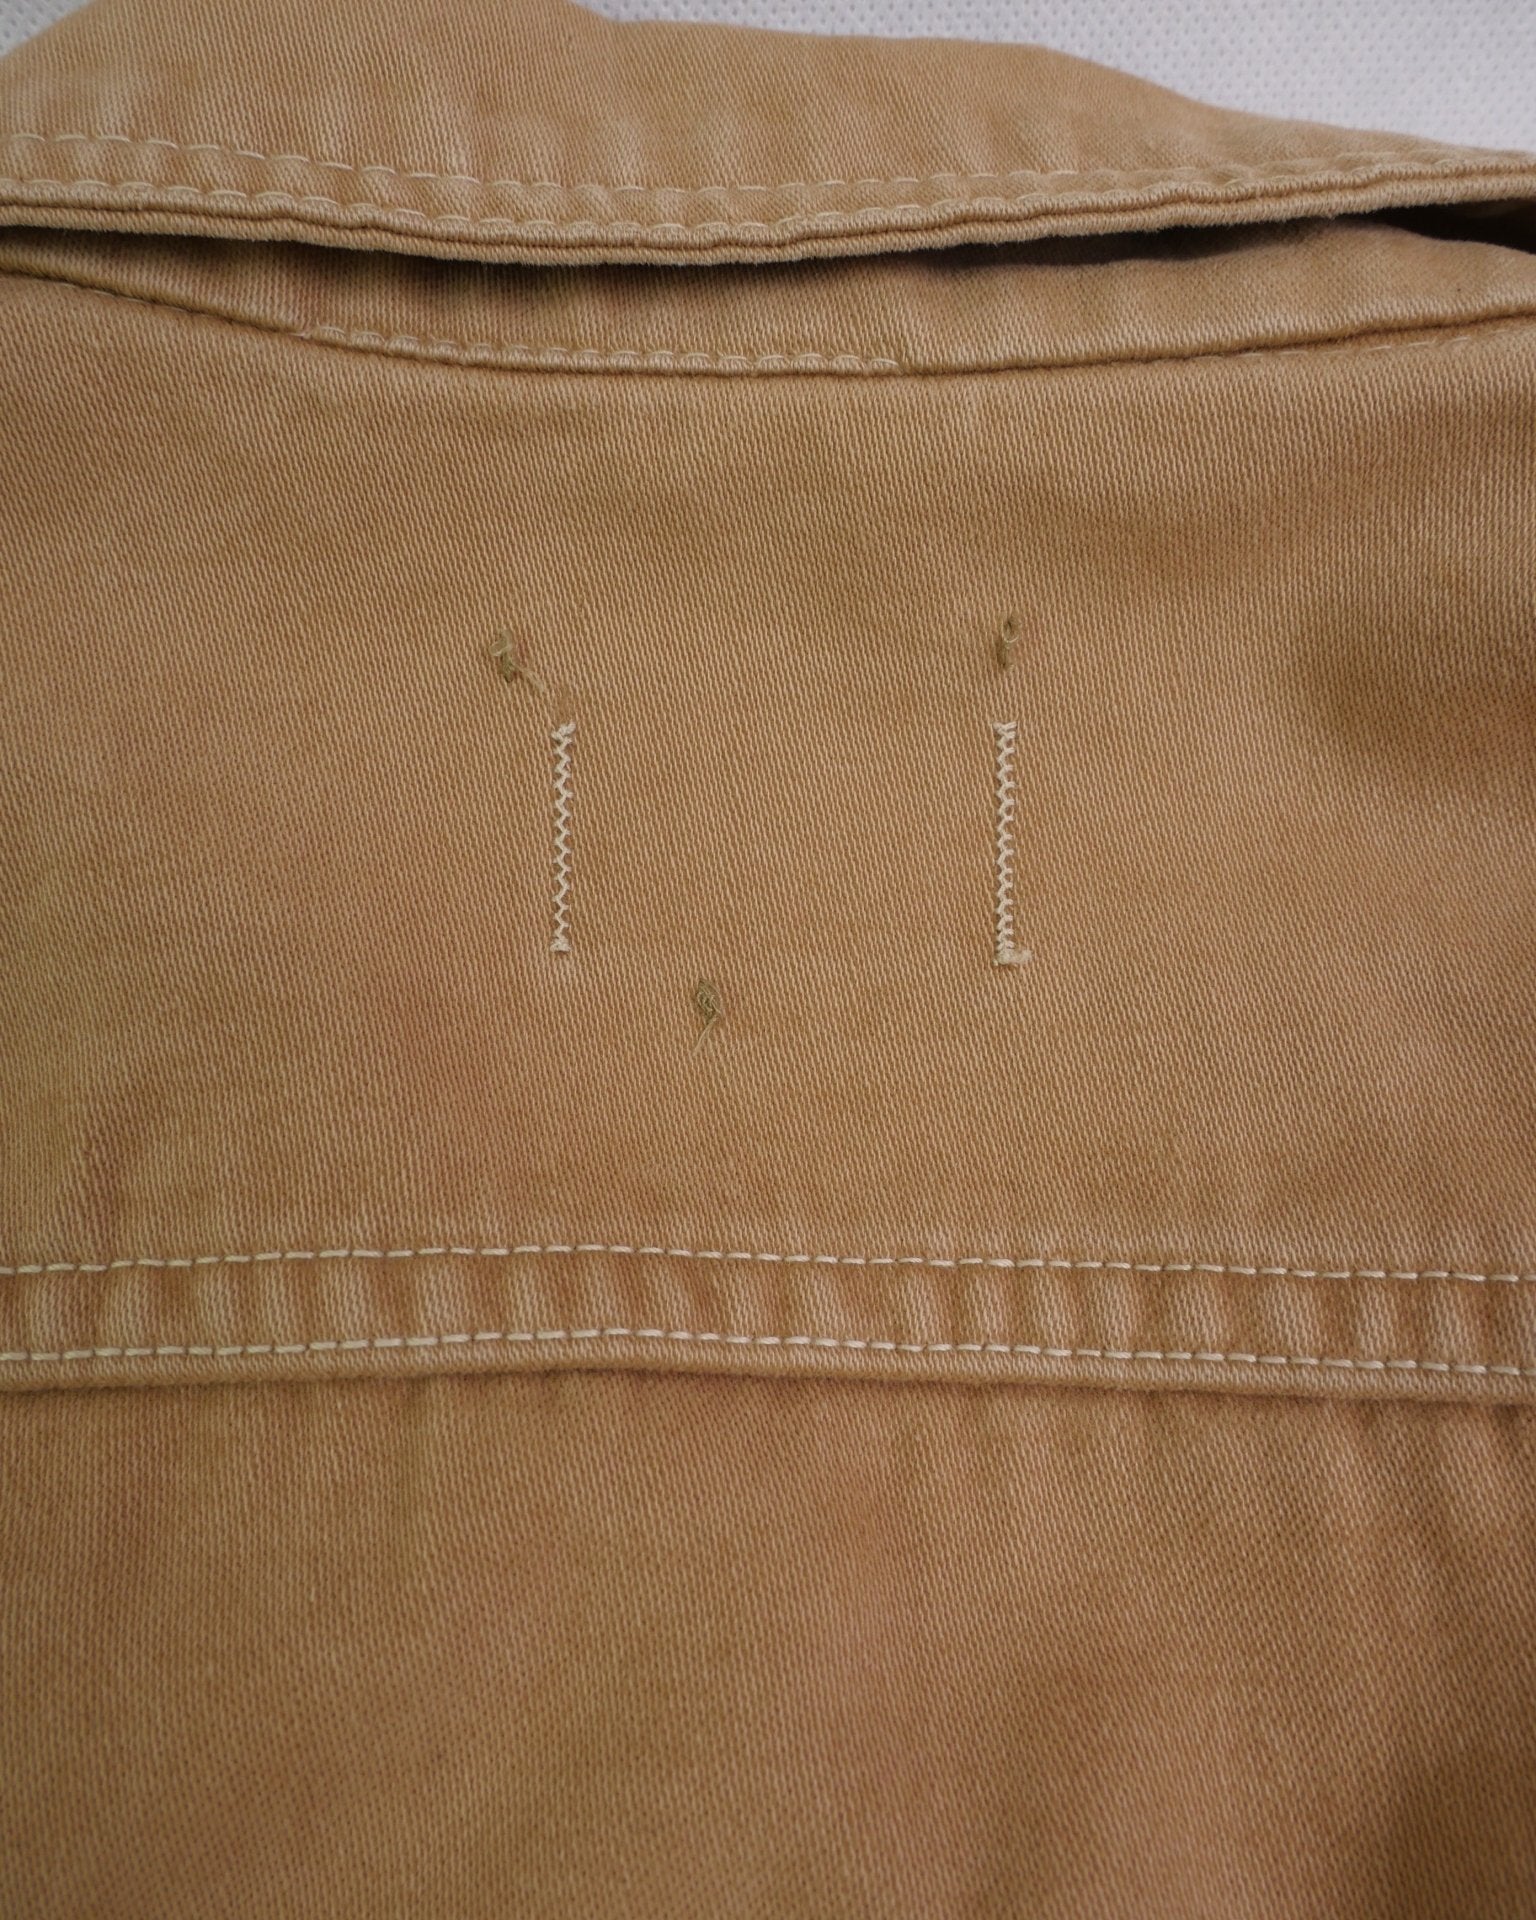 Lee patched Logo brwon Denim Jacket - Peeces